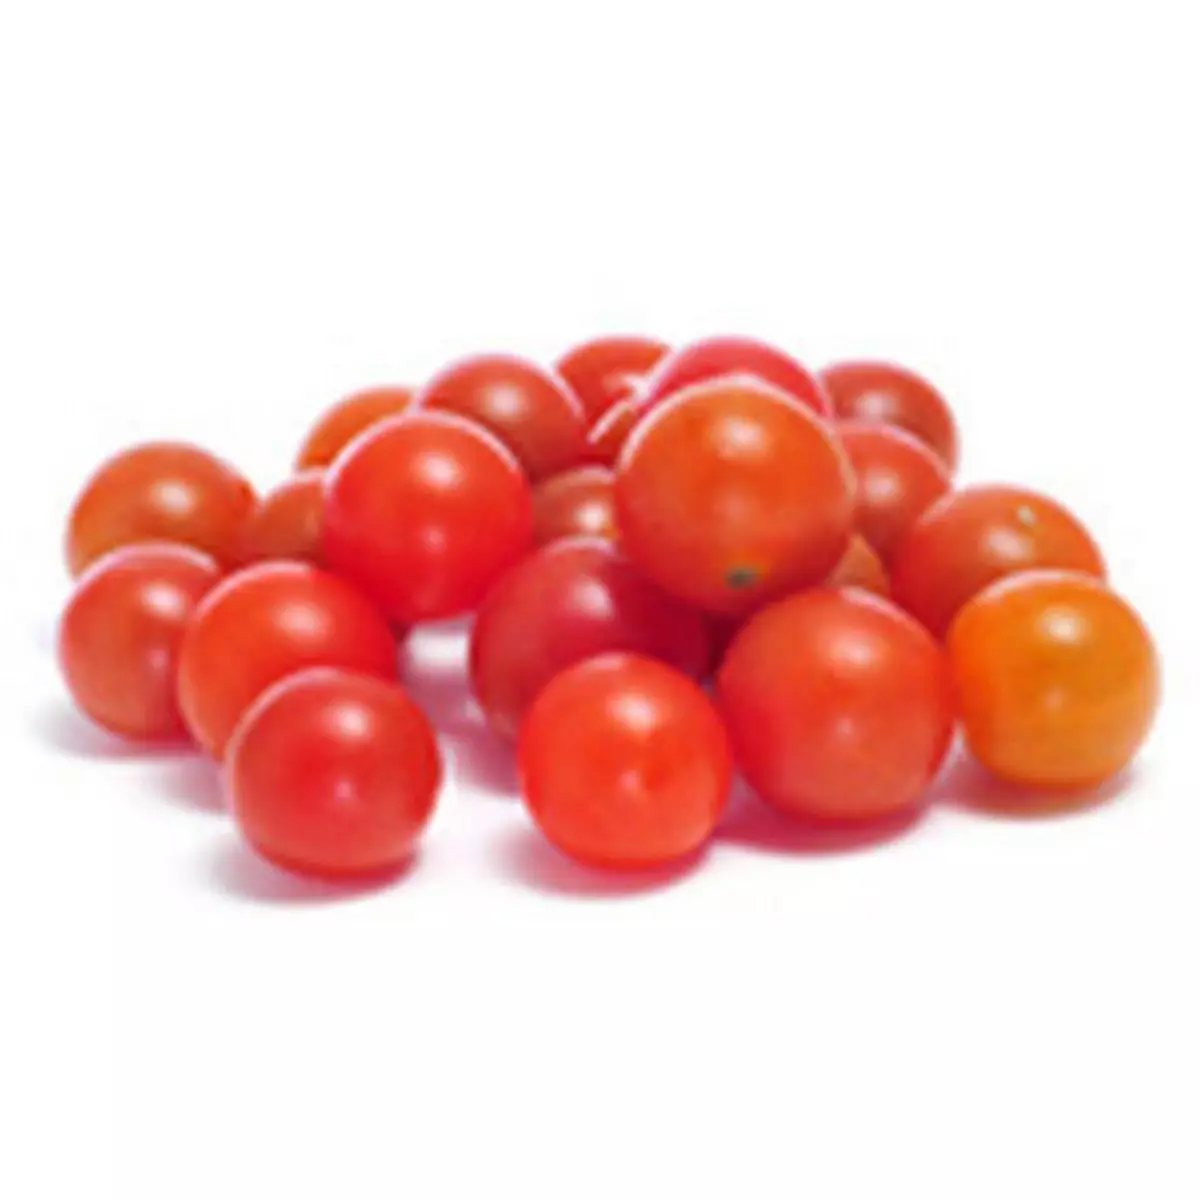 Tomates cerises rondes 250g